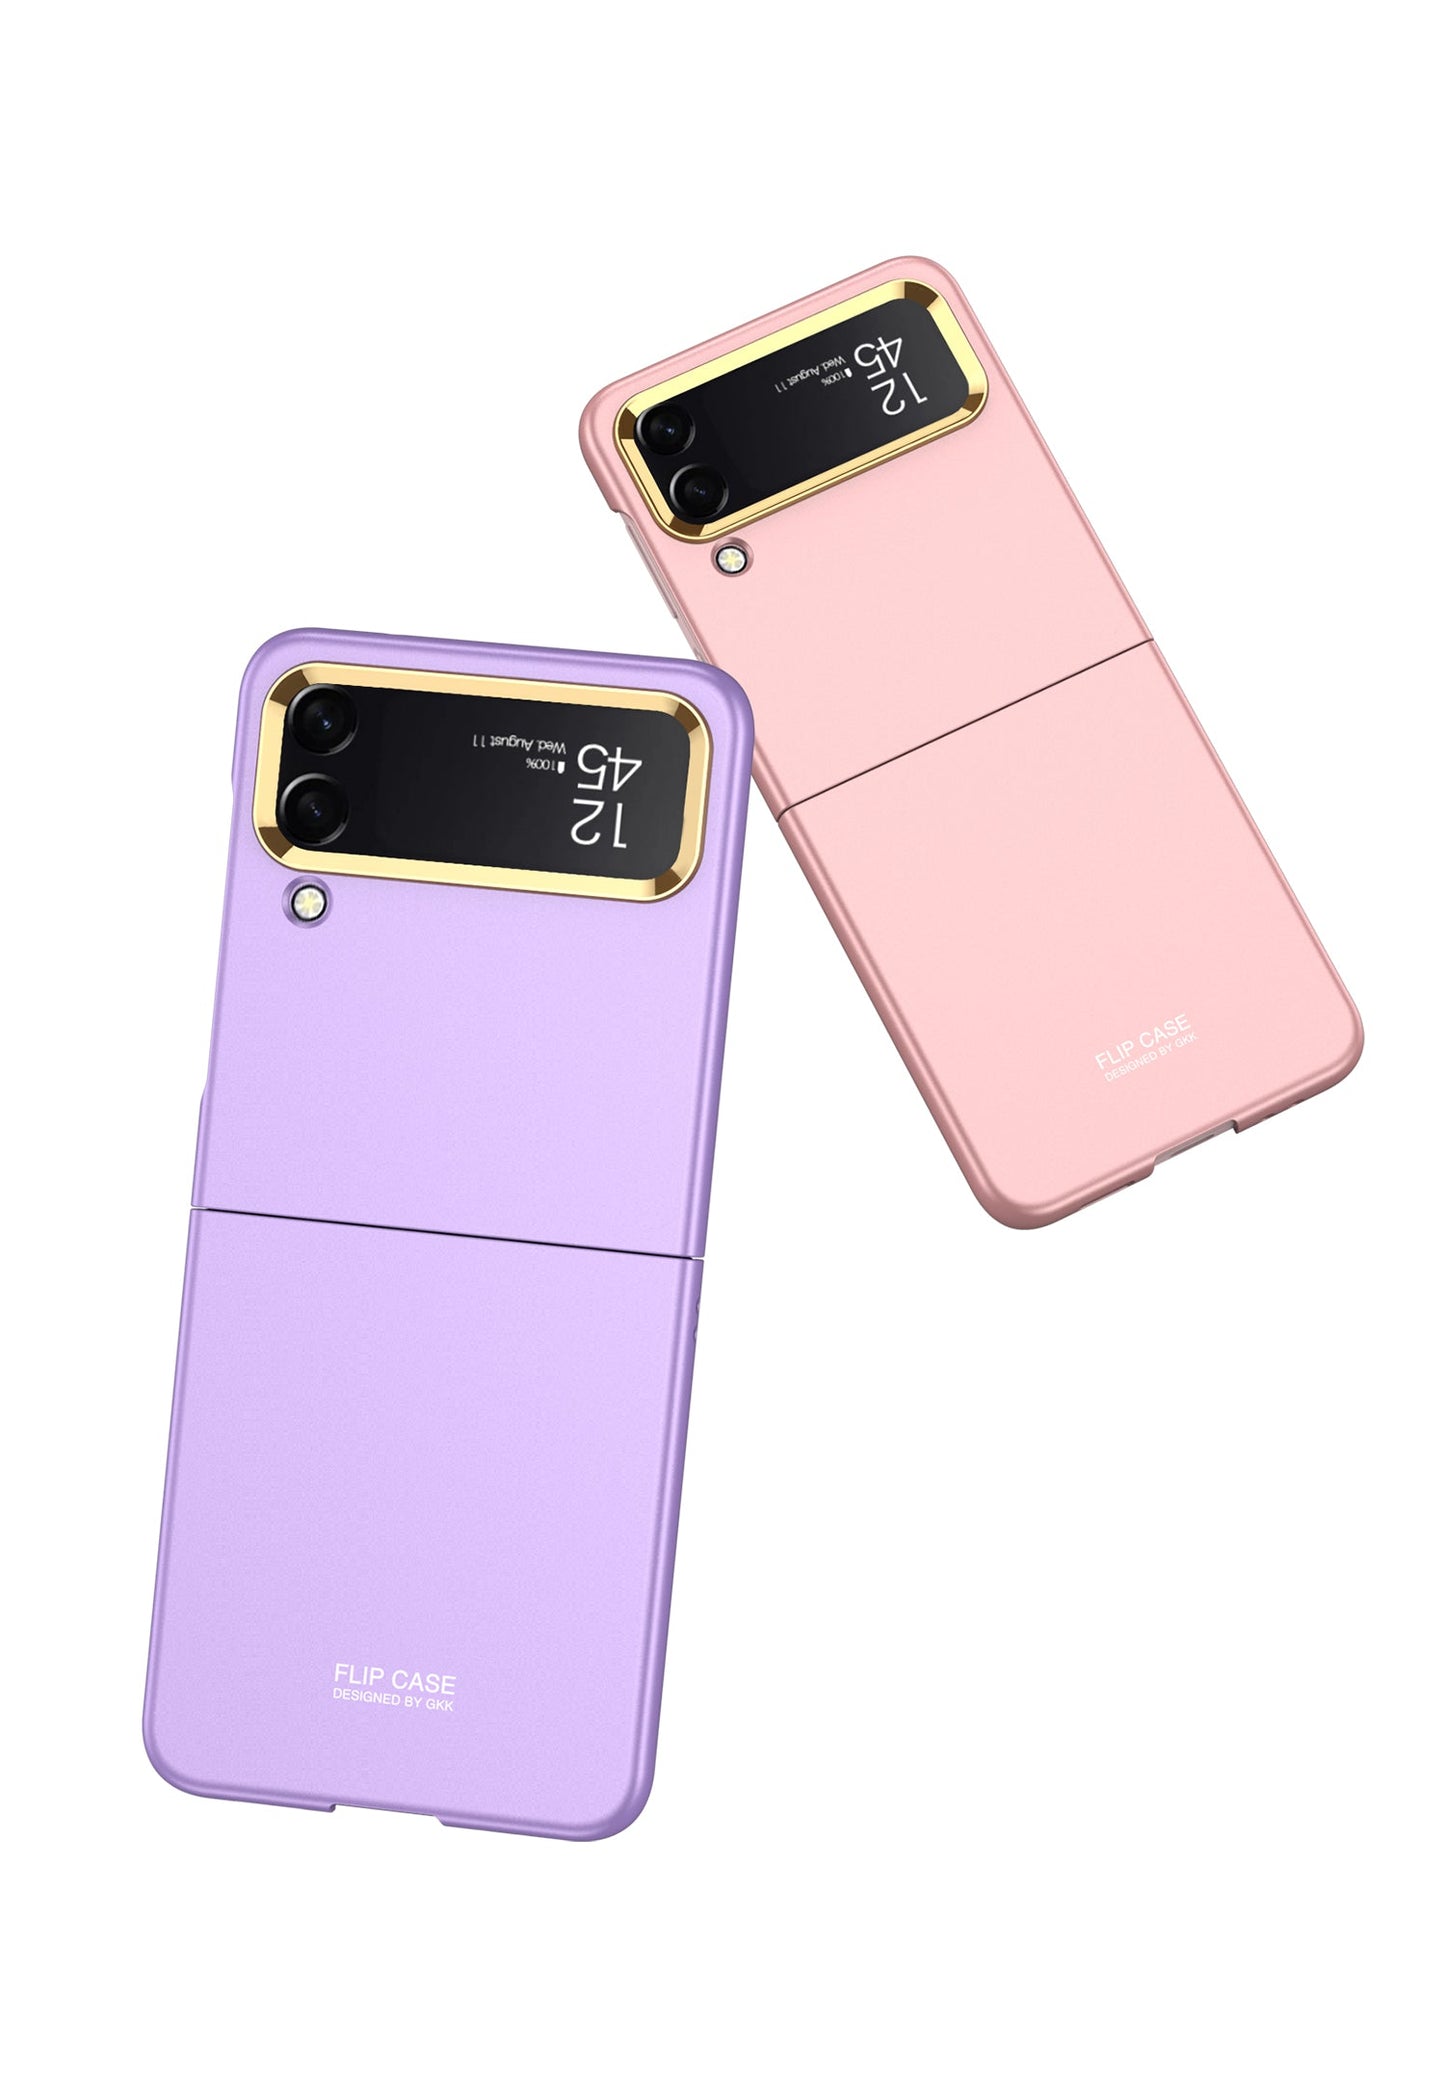 PC Folding Case For Samsung Galaxy Z Flip 4 5G Phone Case Ultra-thin Anti Fingerprint Camera Protective elegant shell for flip4